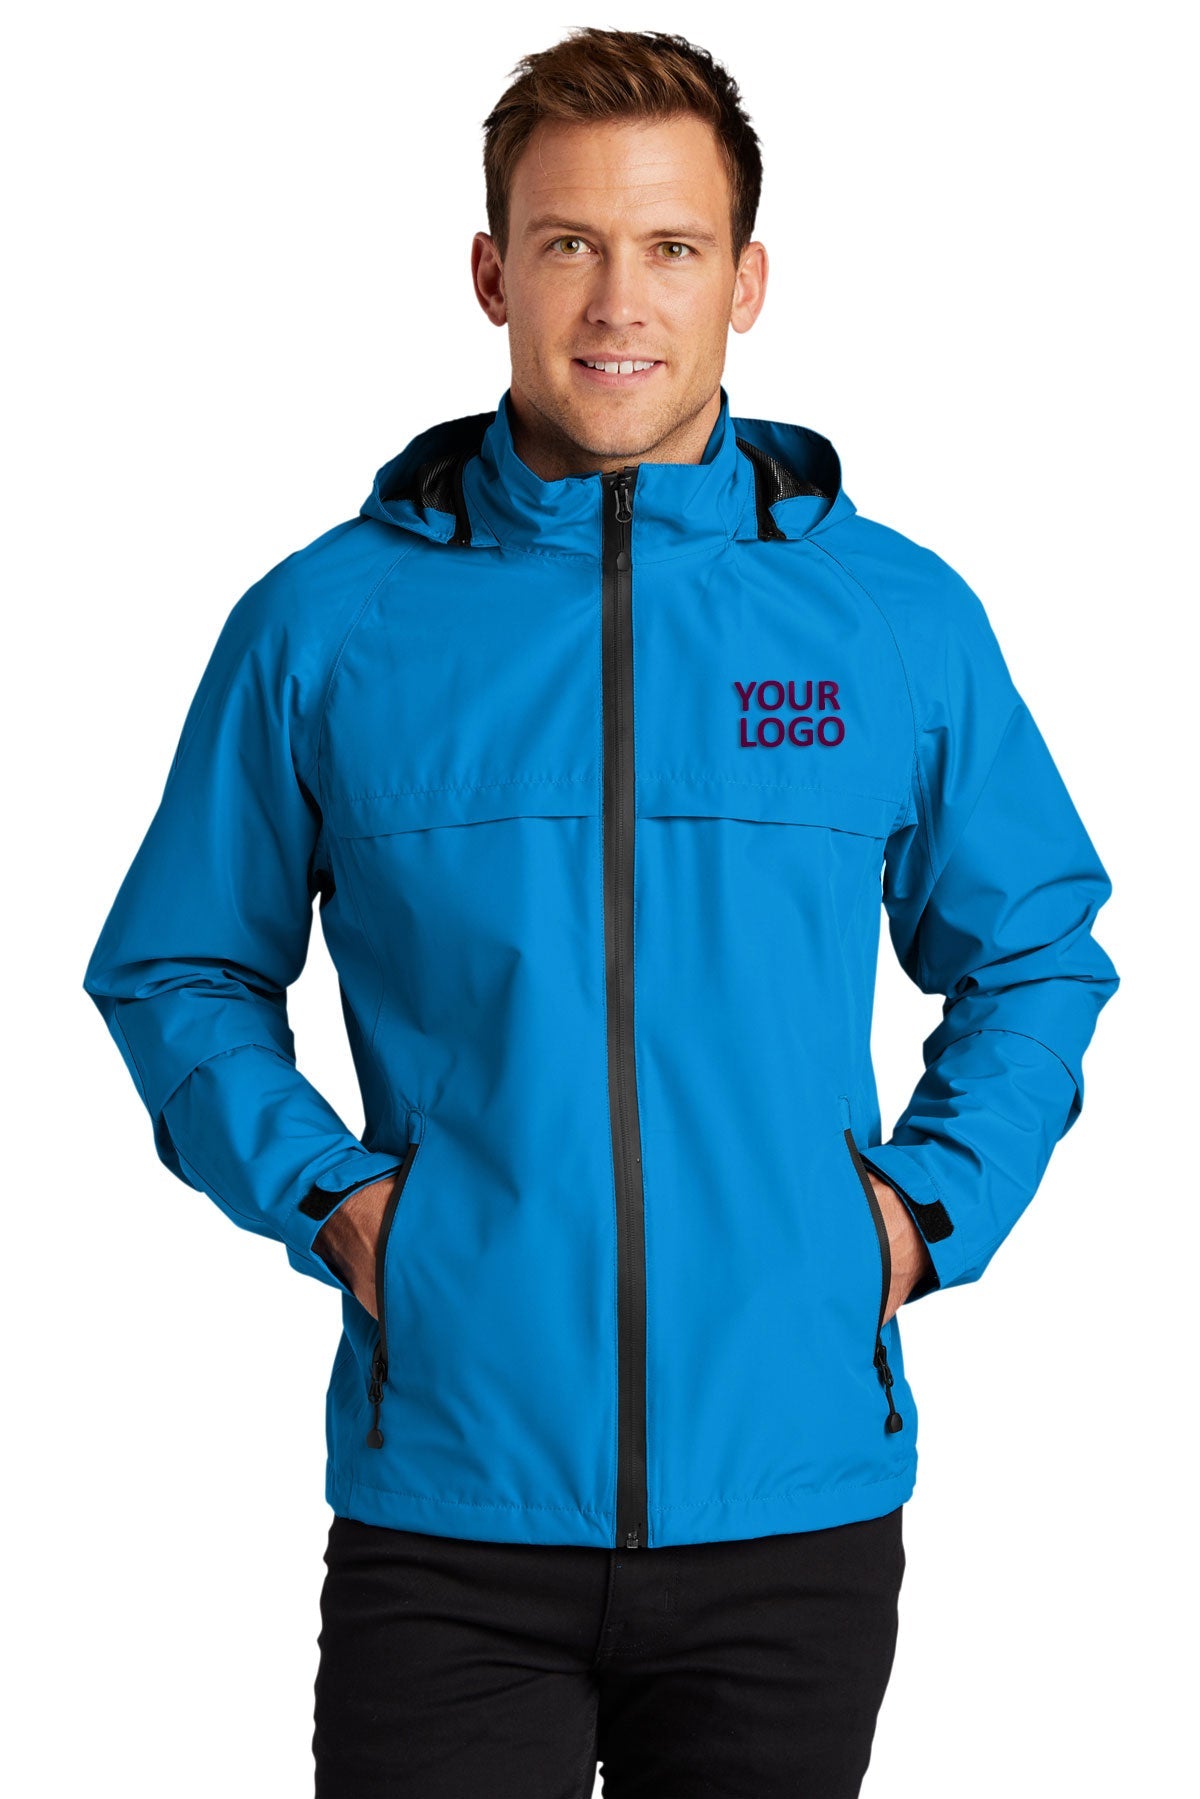 Port Authority Direct Blue J333 company logo jackets